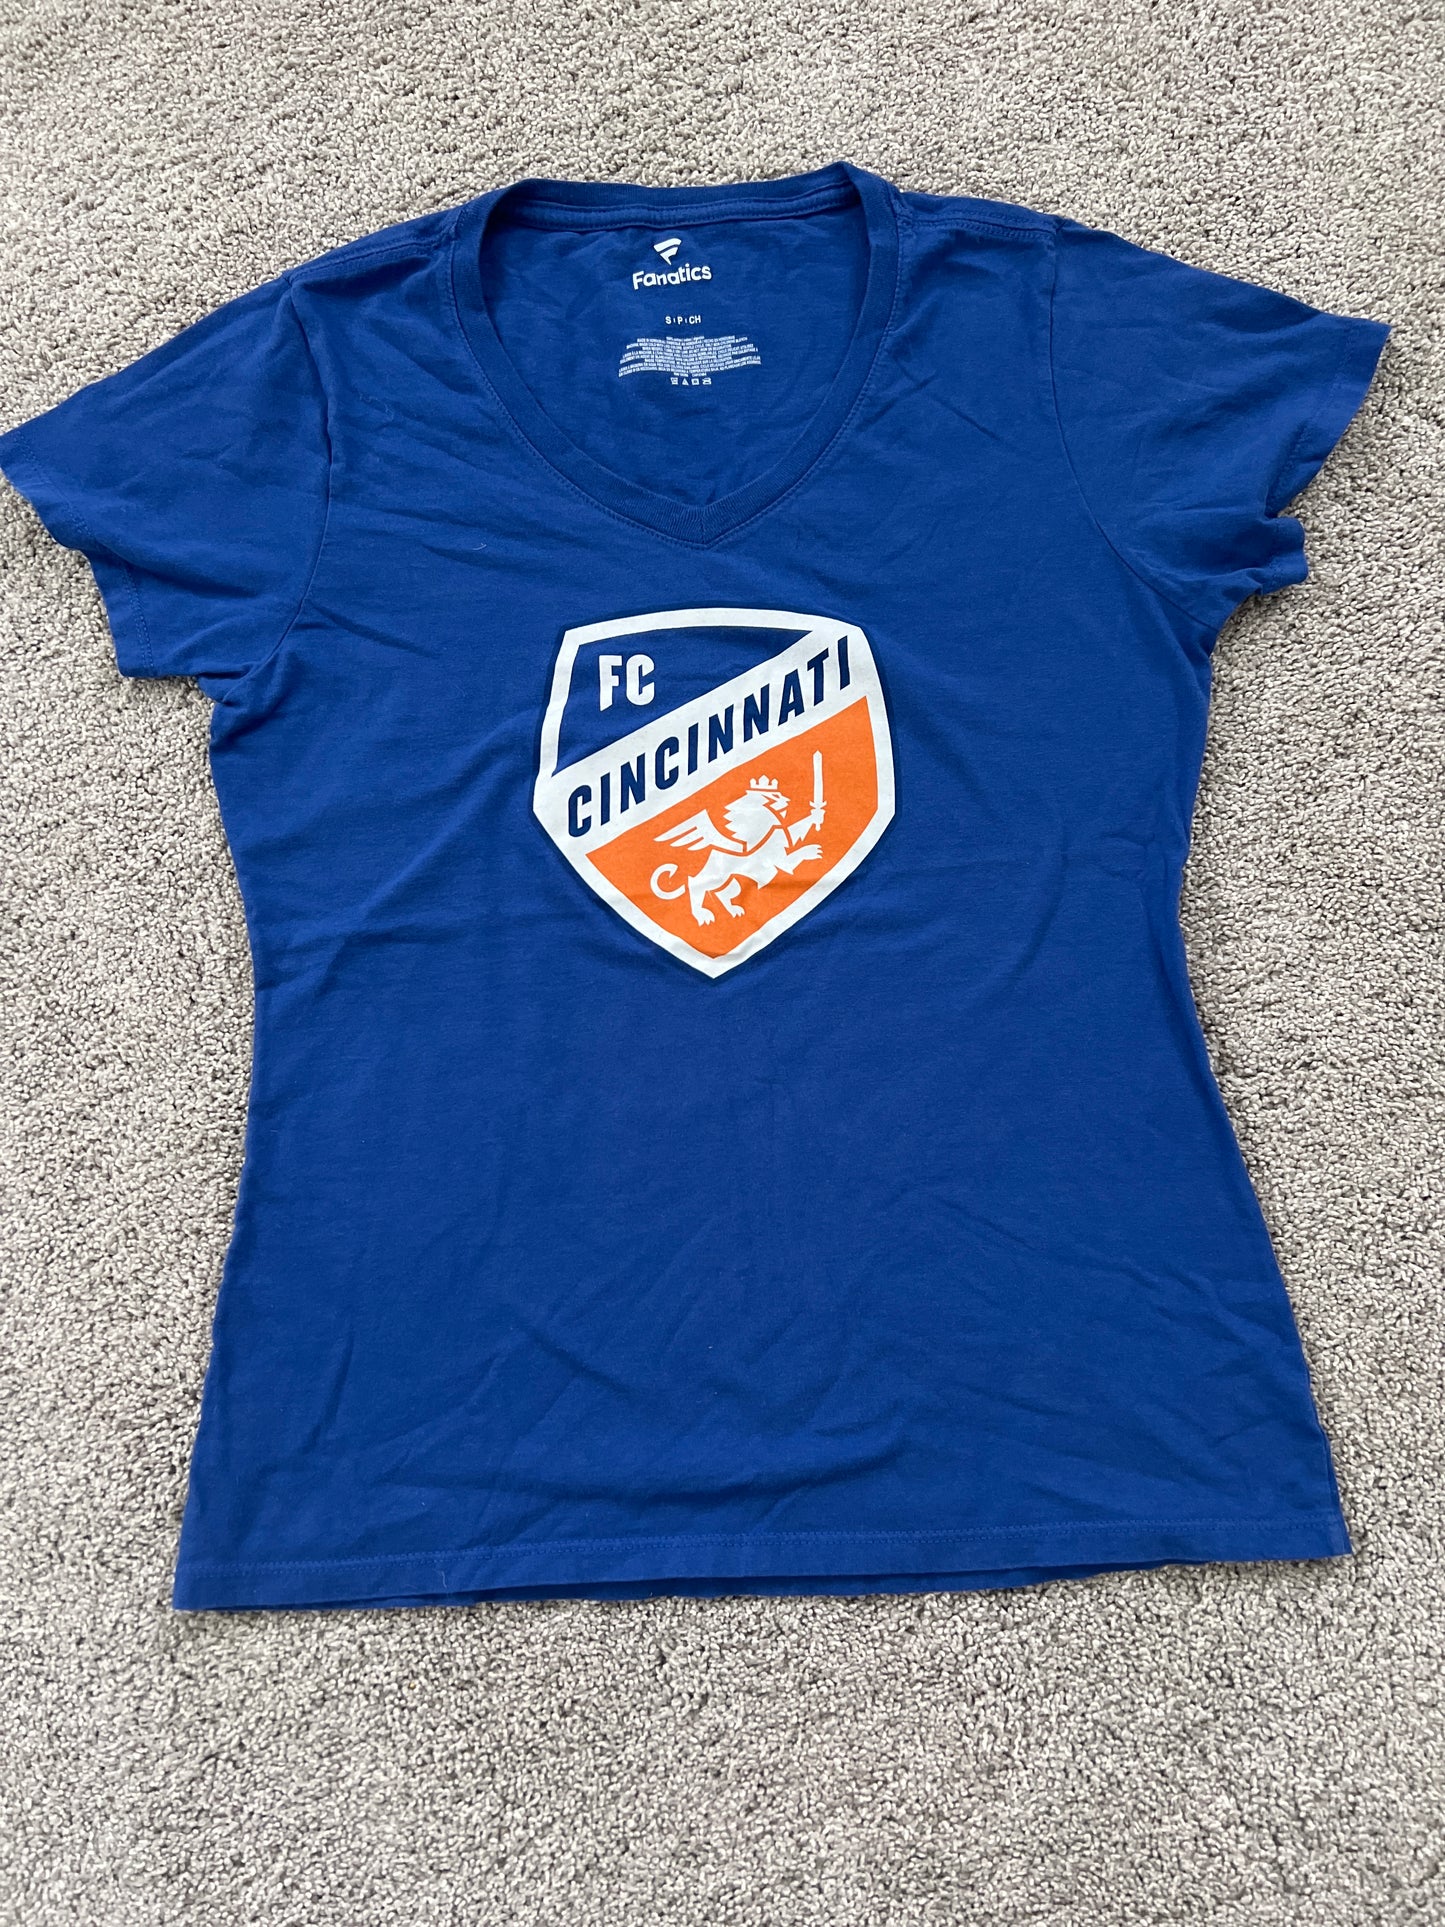 Women’s FC Cincinnati Vneck Tshirt Size S PPU 45243